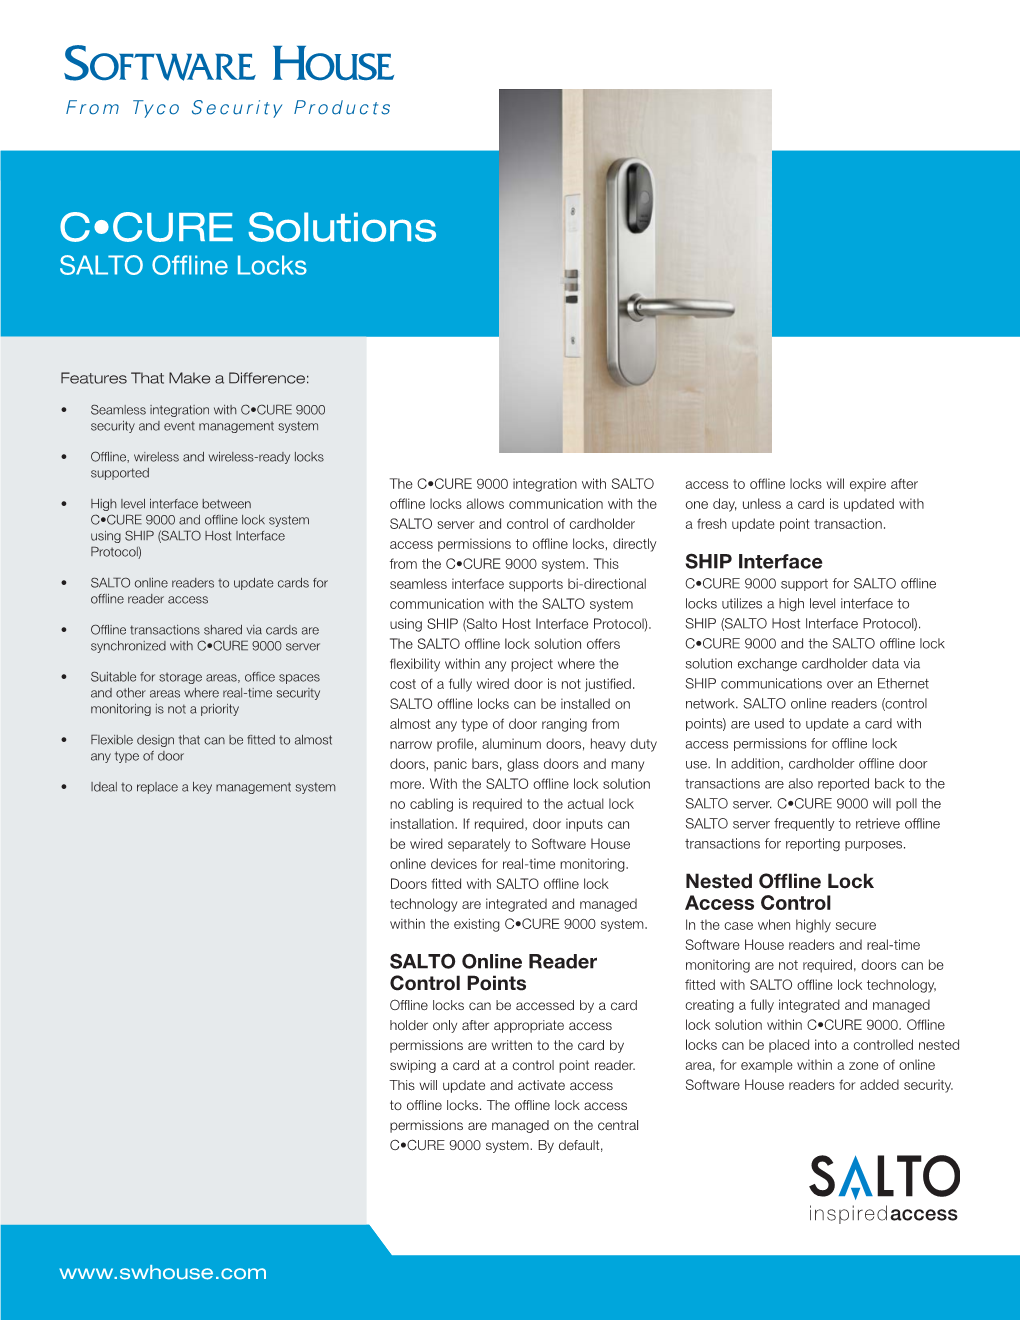 C•CURE Solutions SALTO Offline Locks